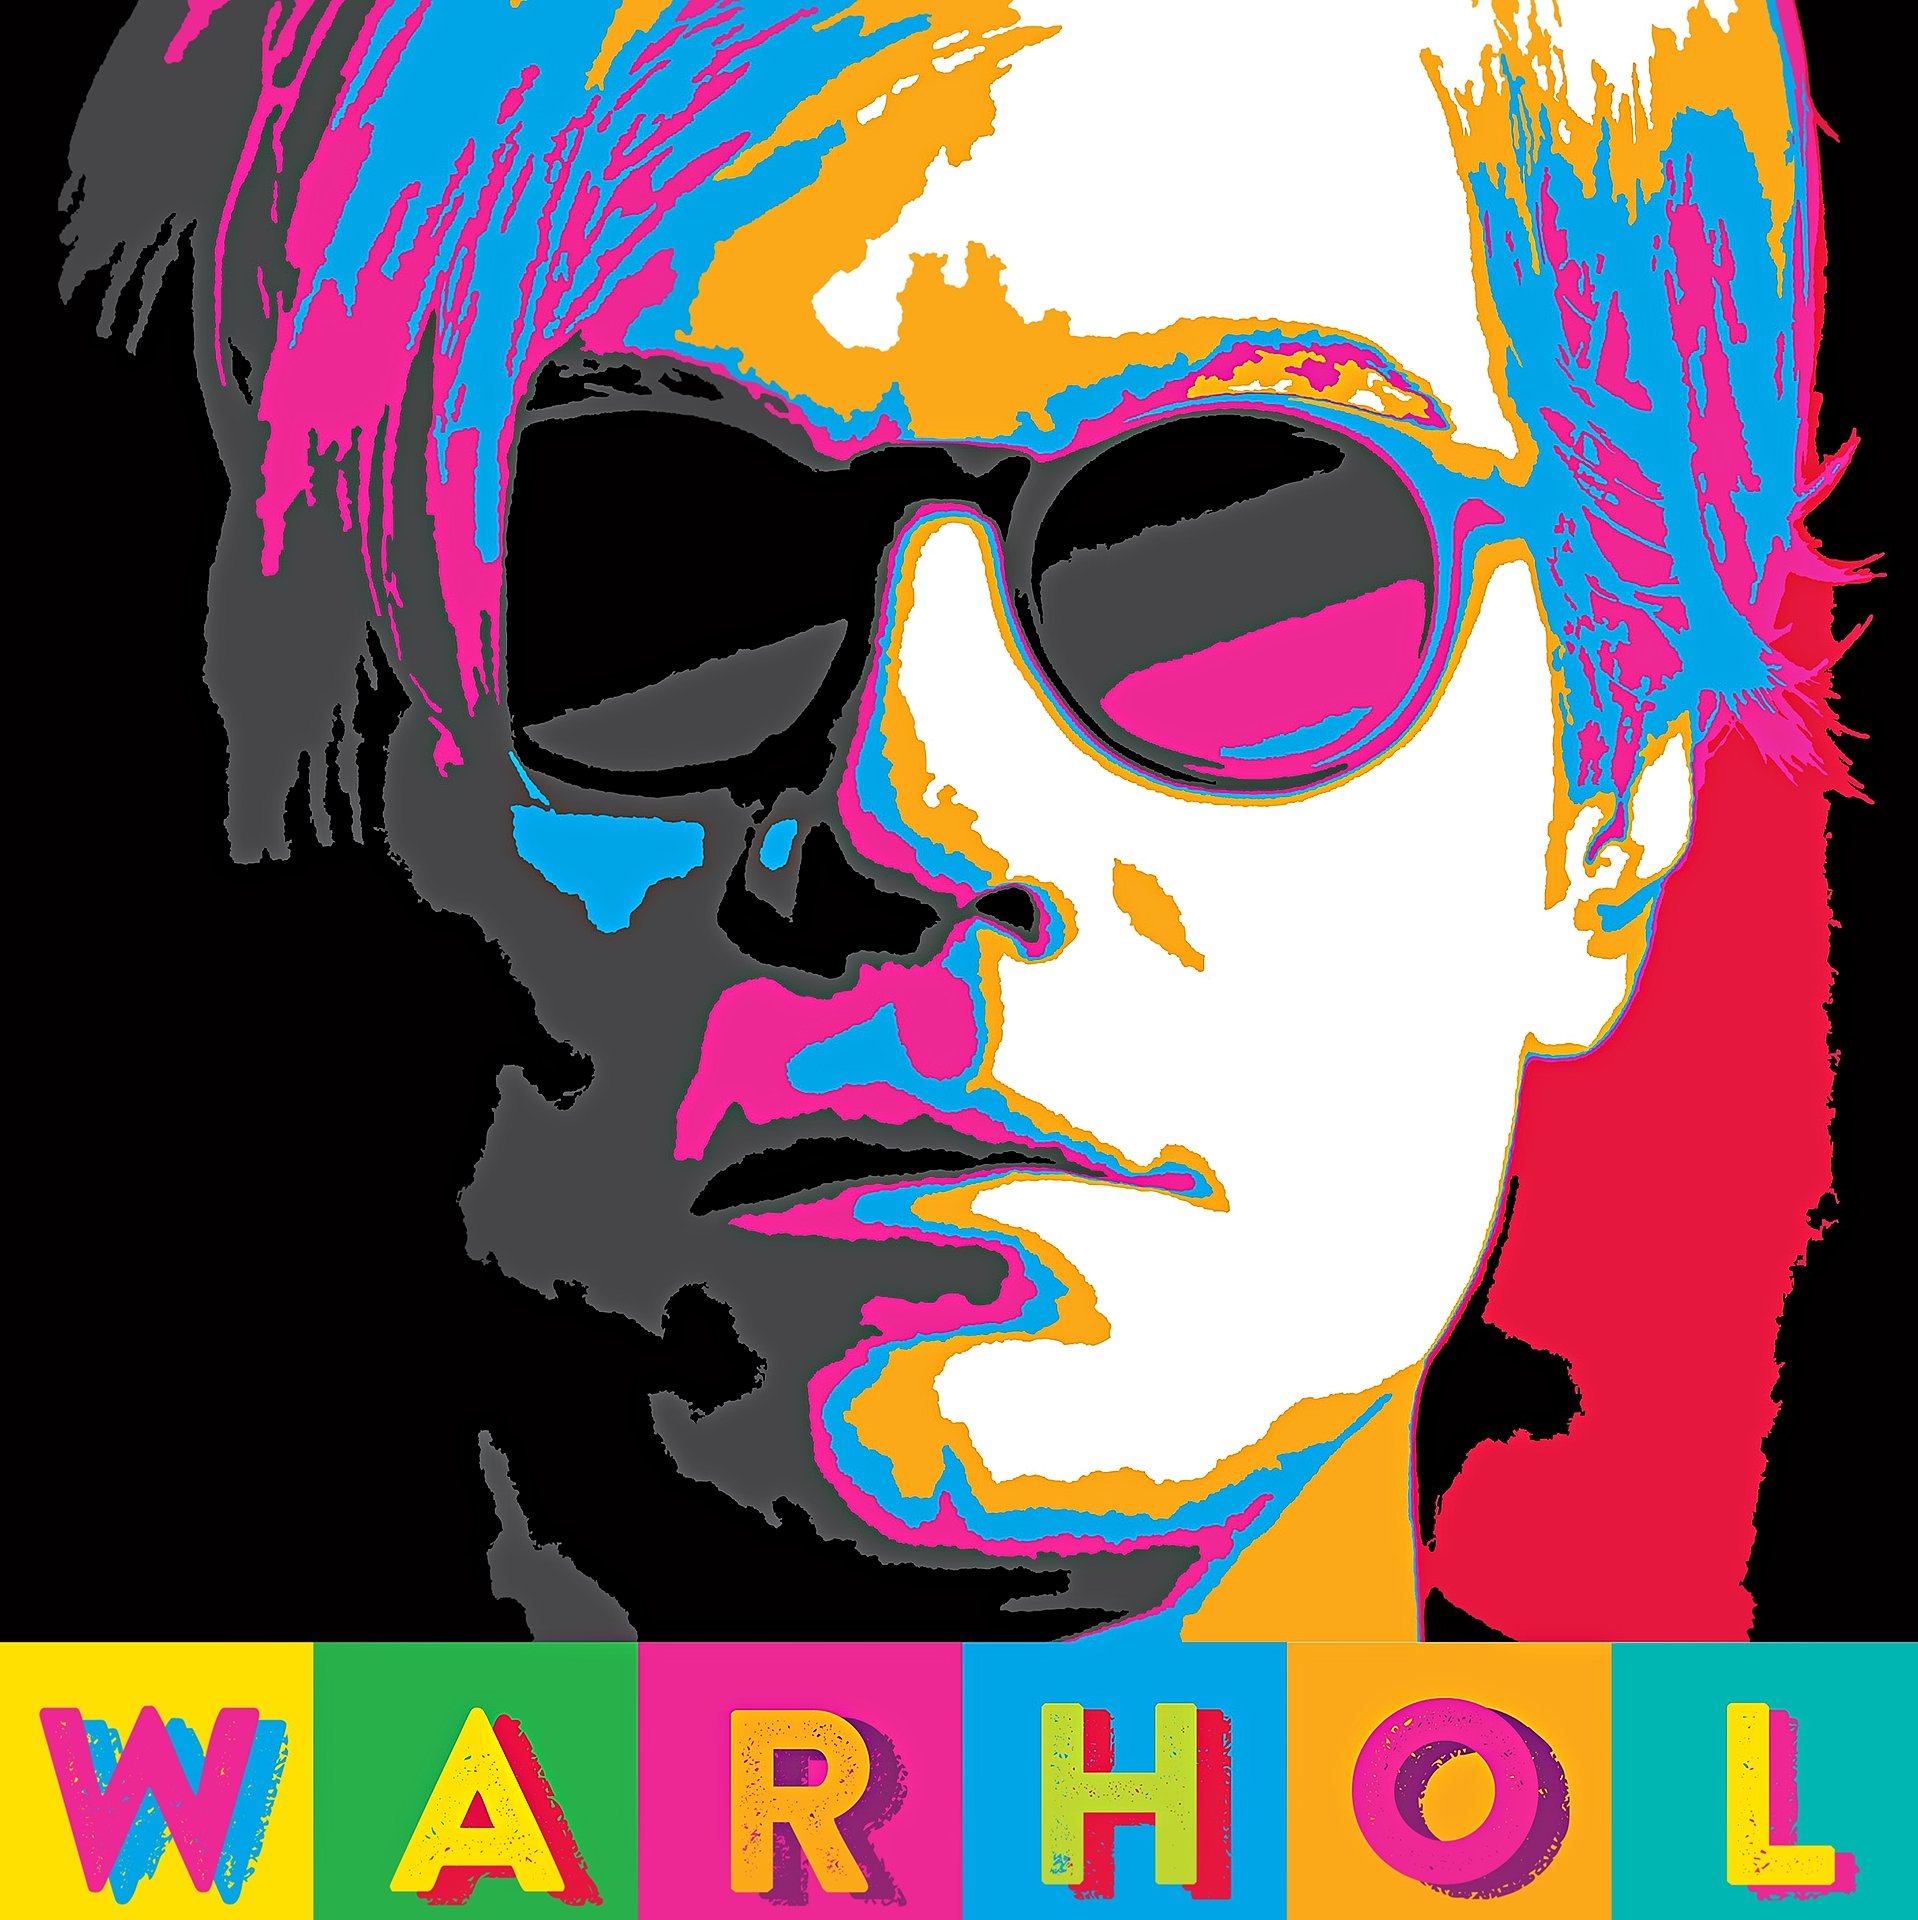 Andy Warhol exhibition at Miami Art Basel via 360 MAGAZINE.